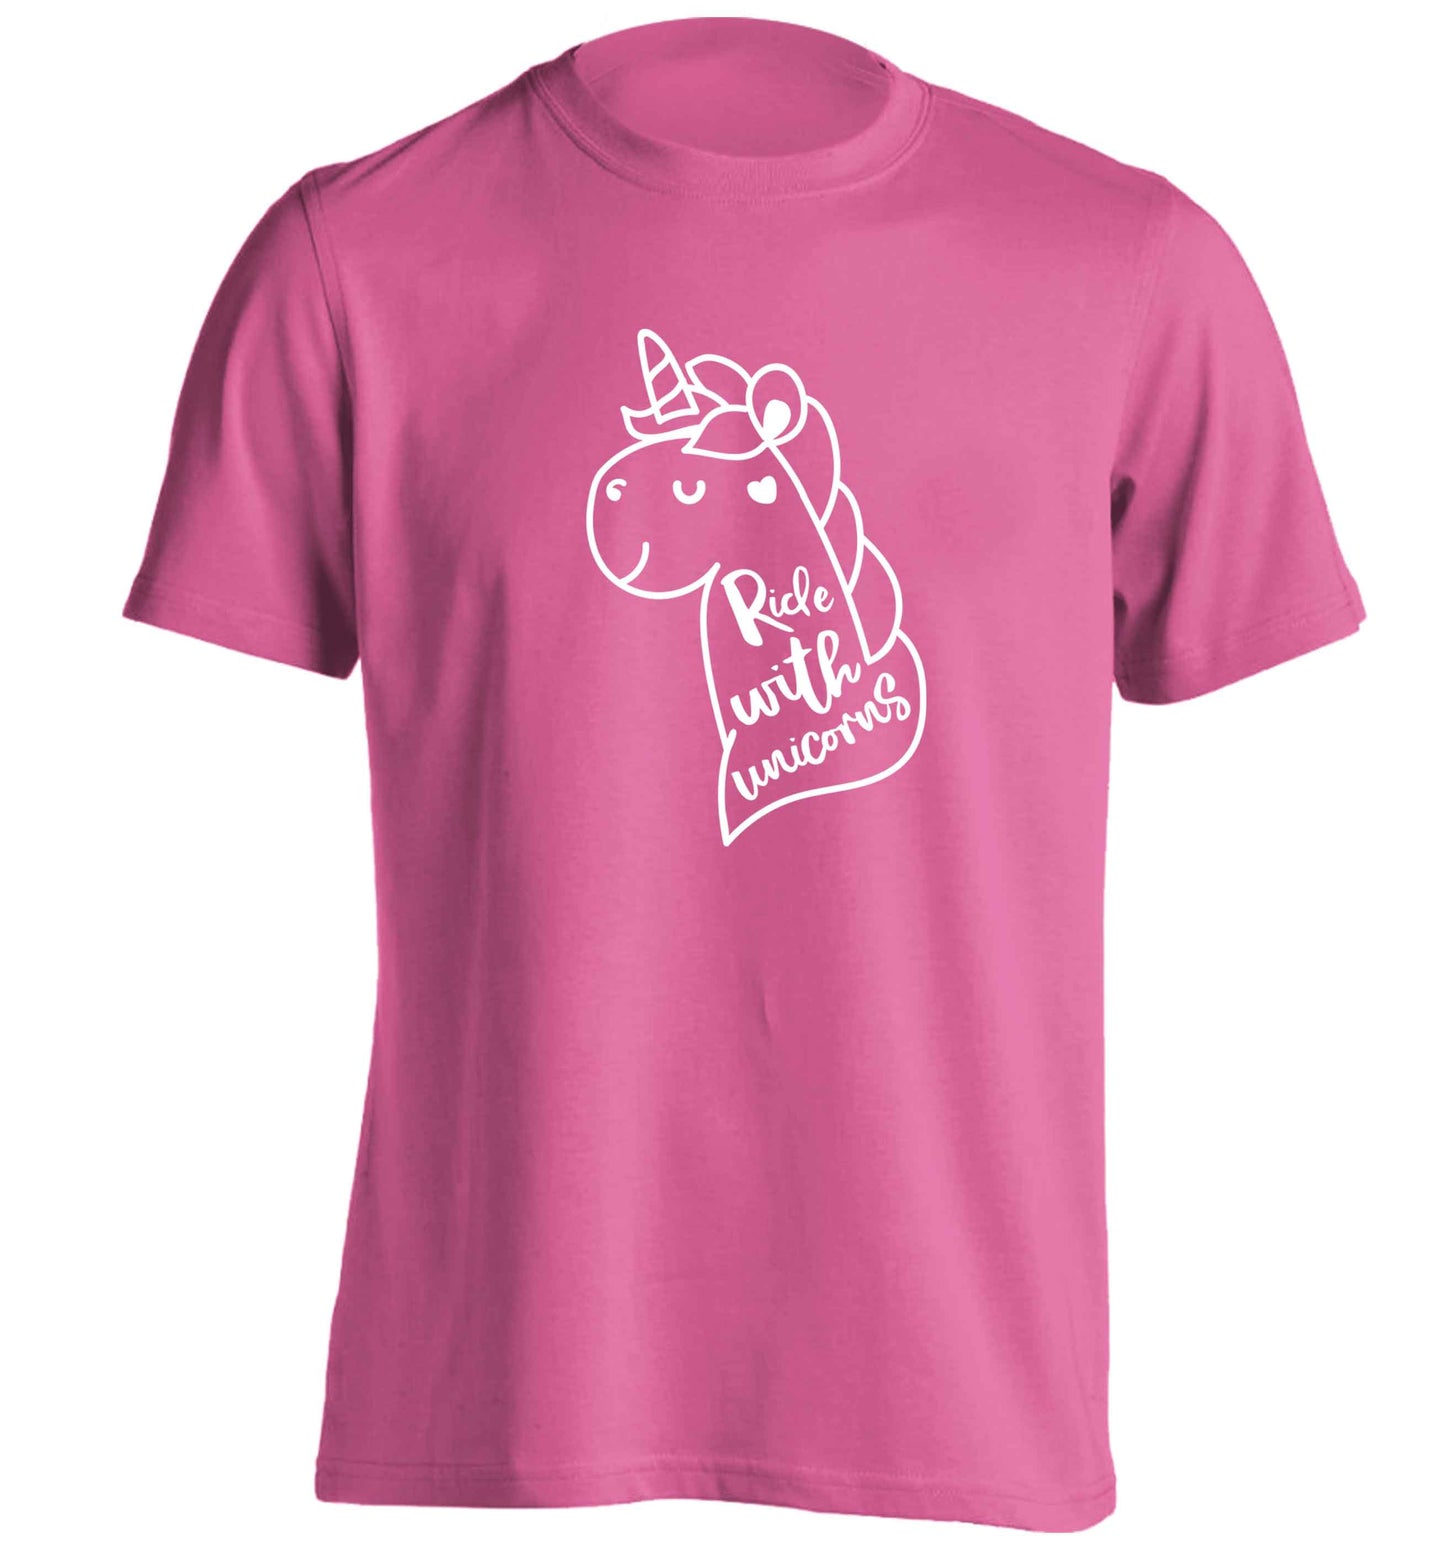 Ride with unicorns adults unisex pink Tshirt 2XL